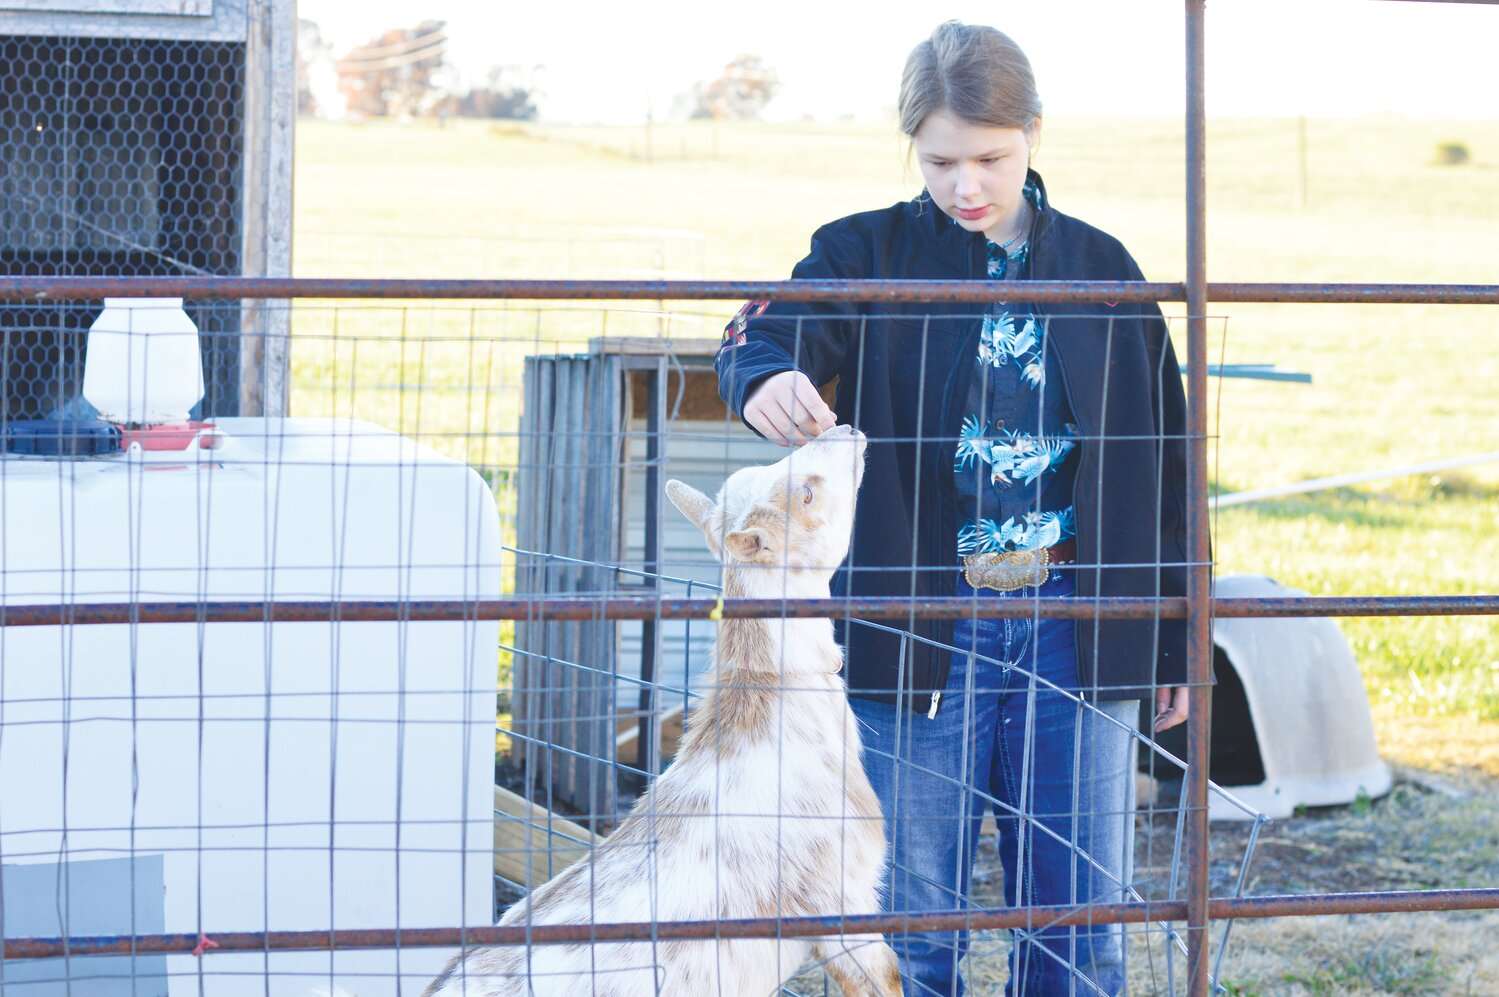 Kya Harris loves taking care of her animals.